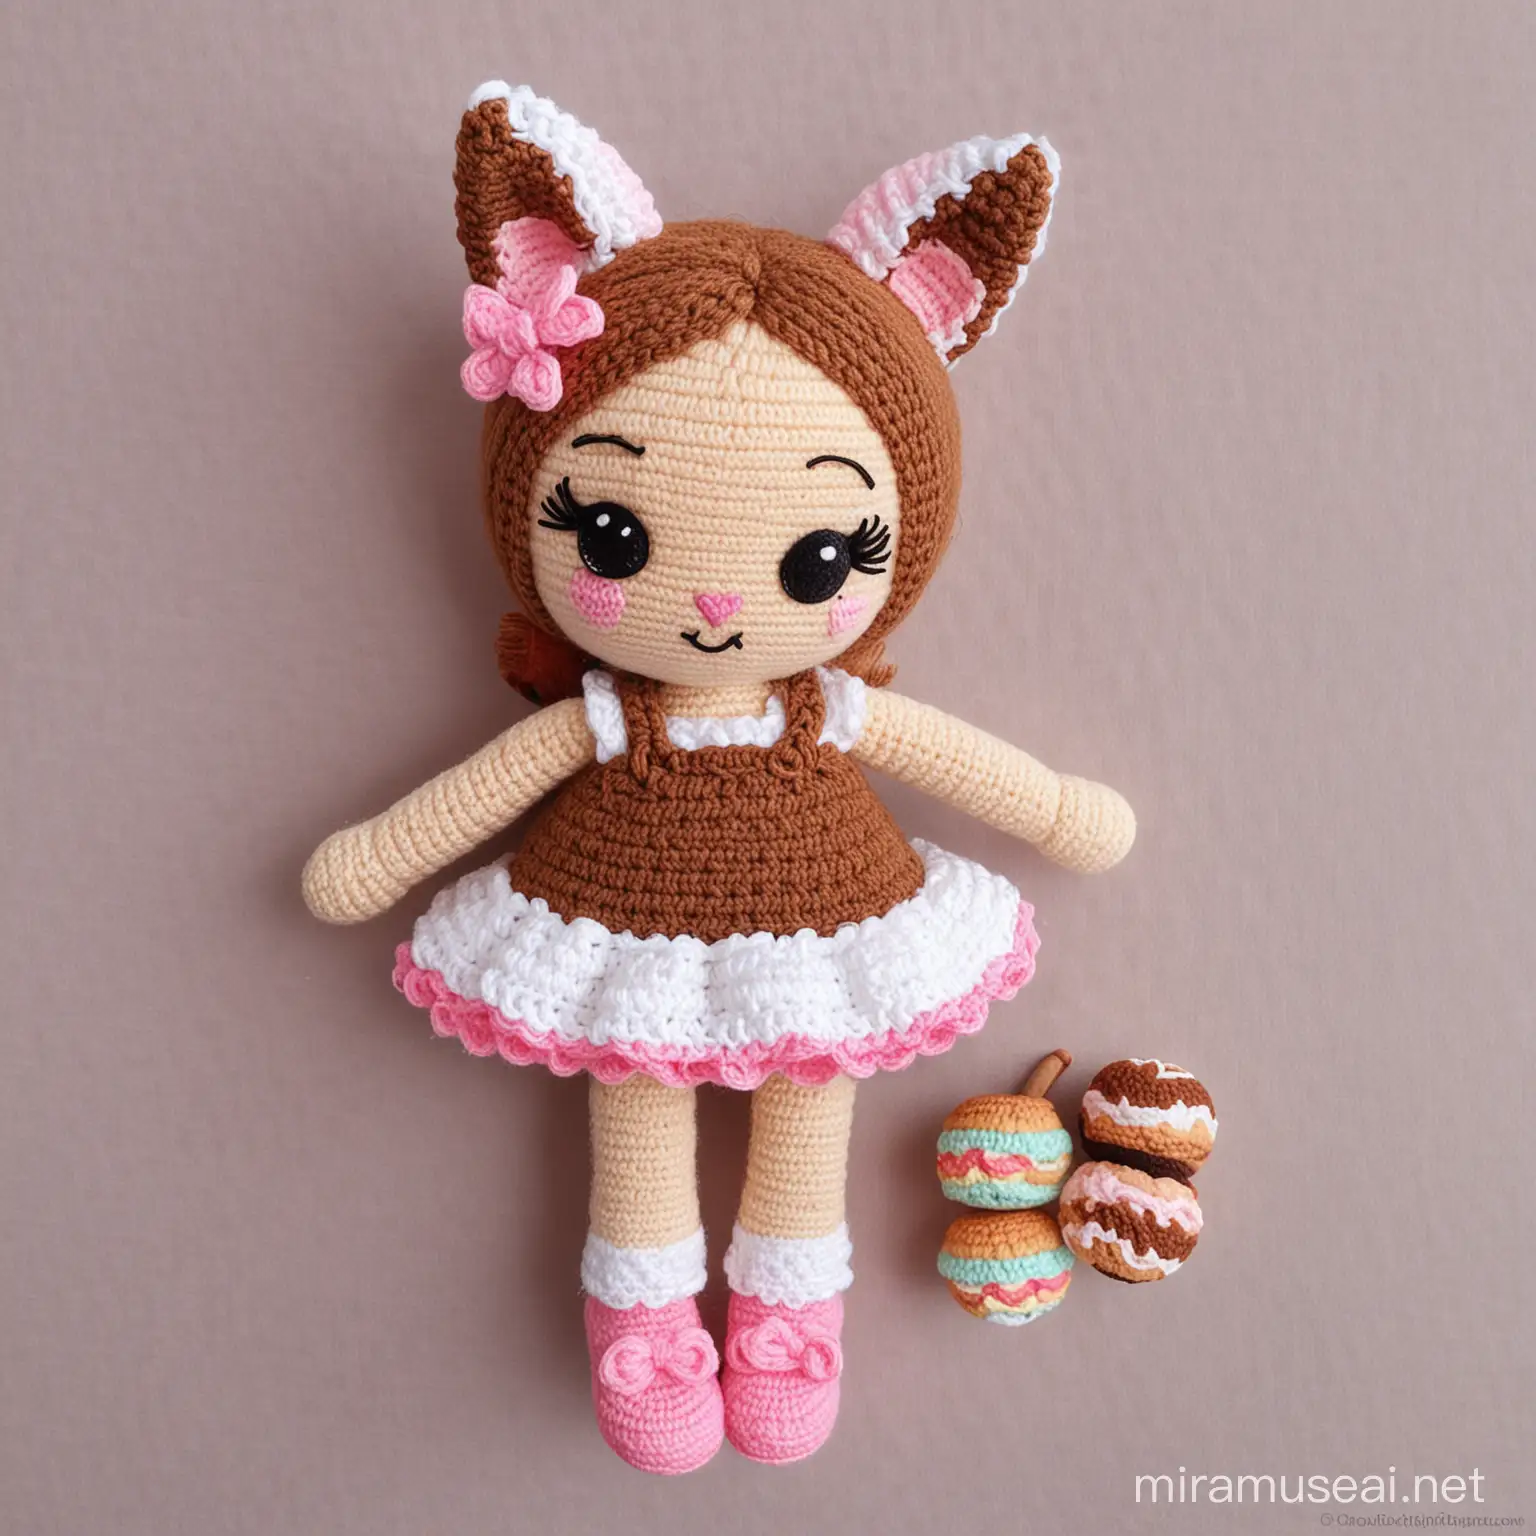 Adorable Amigurumi Crochet Baby Girl and Cat Boy with Sweet Treats